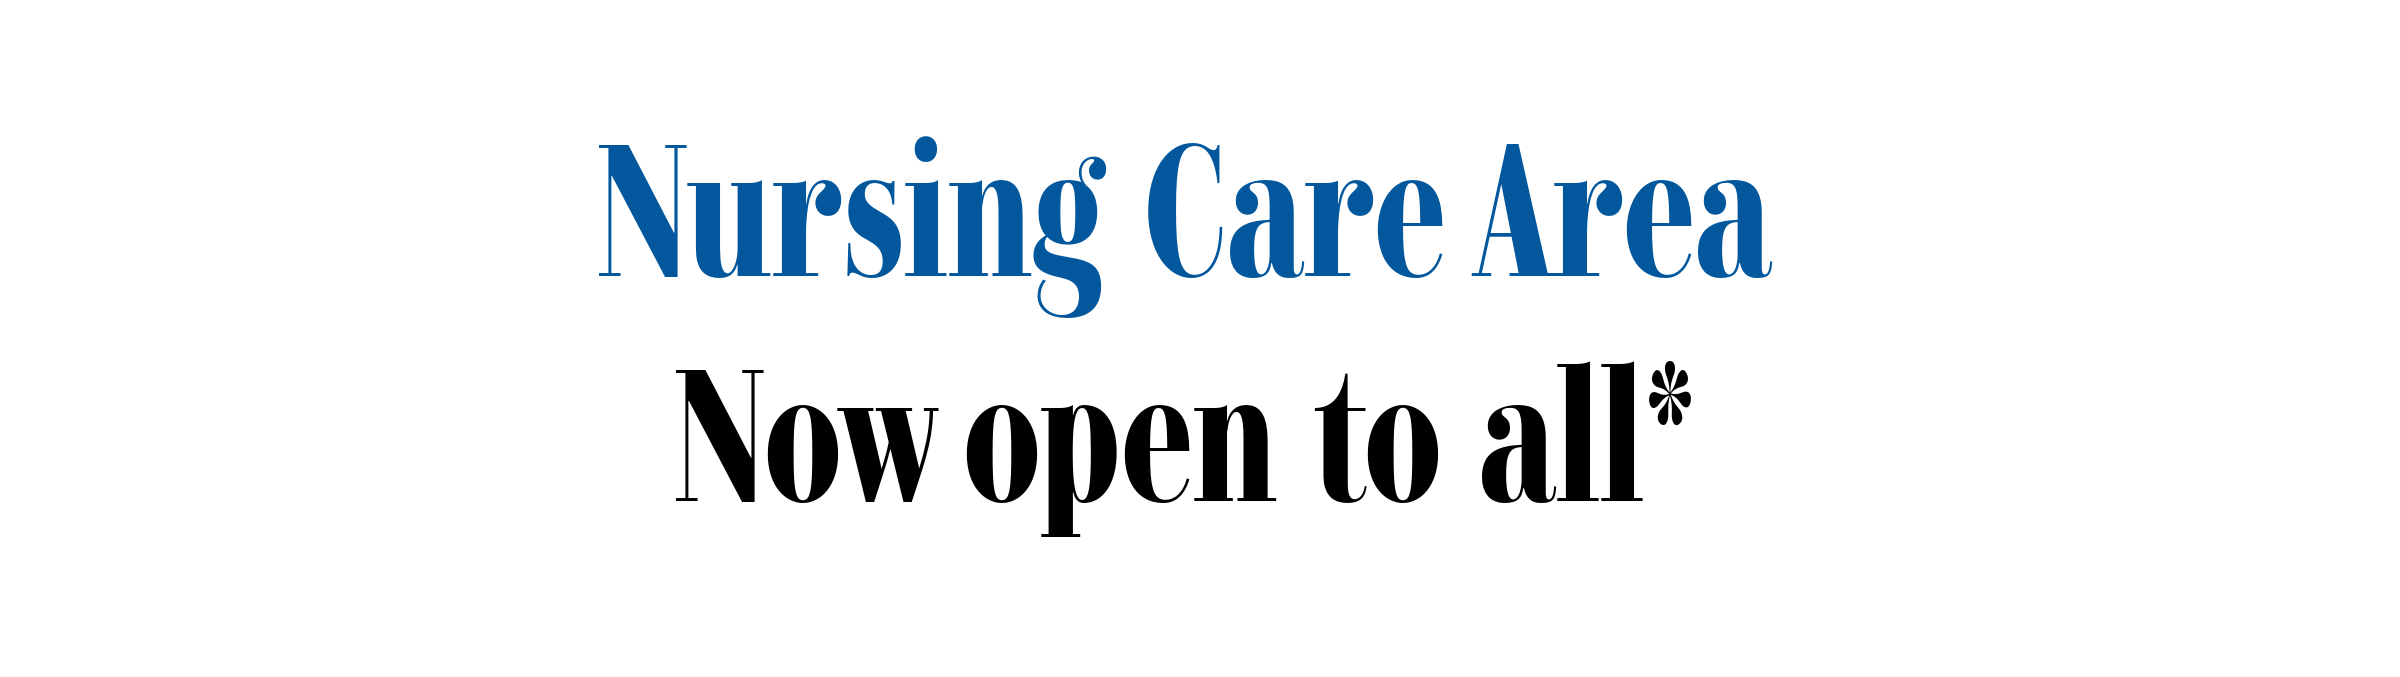 nursing care banner